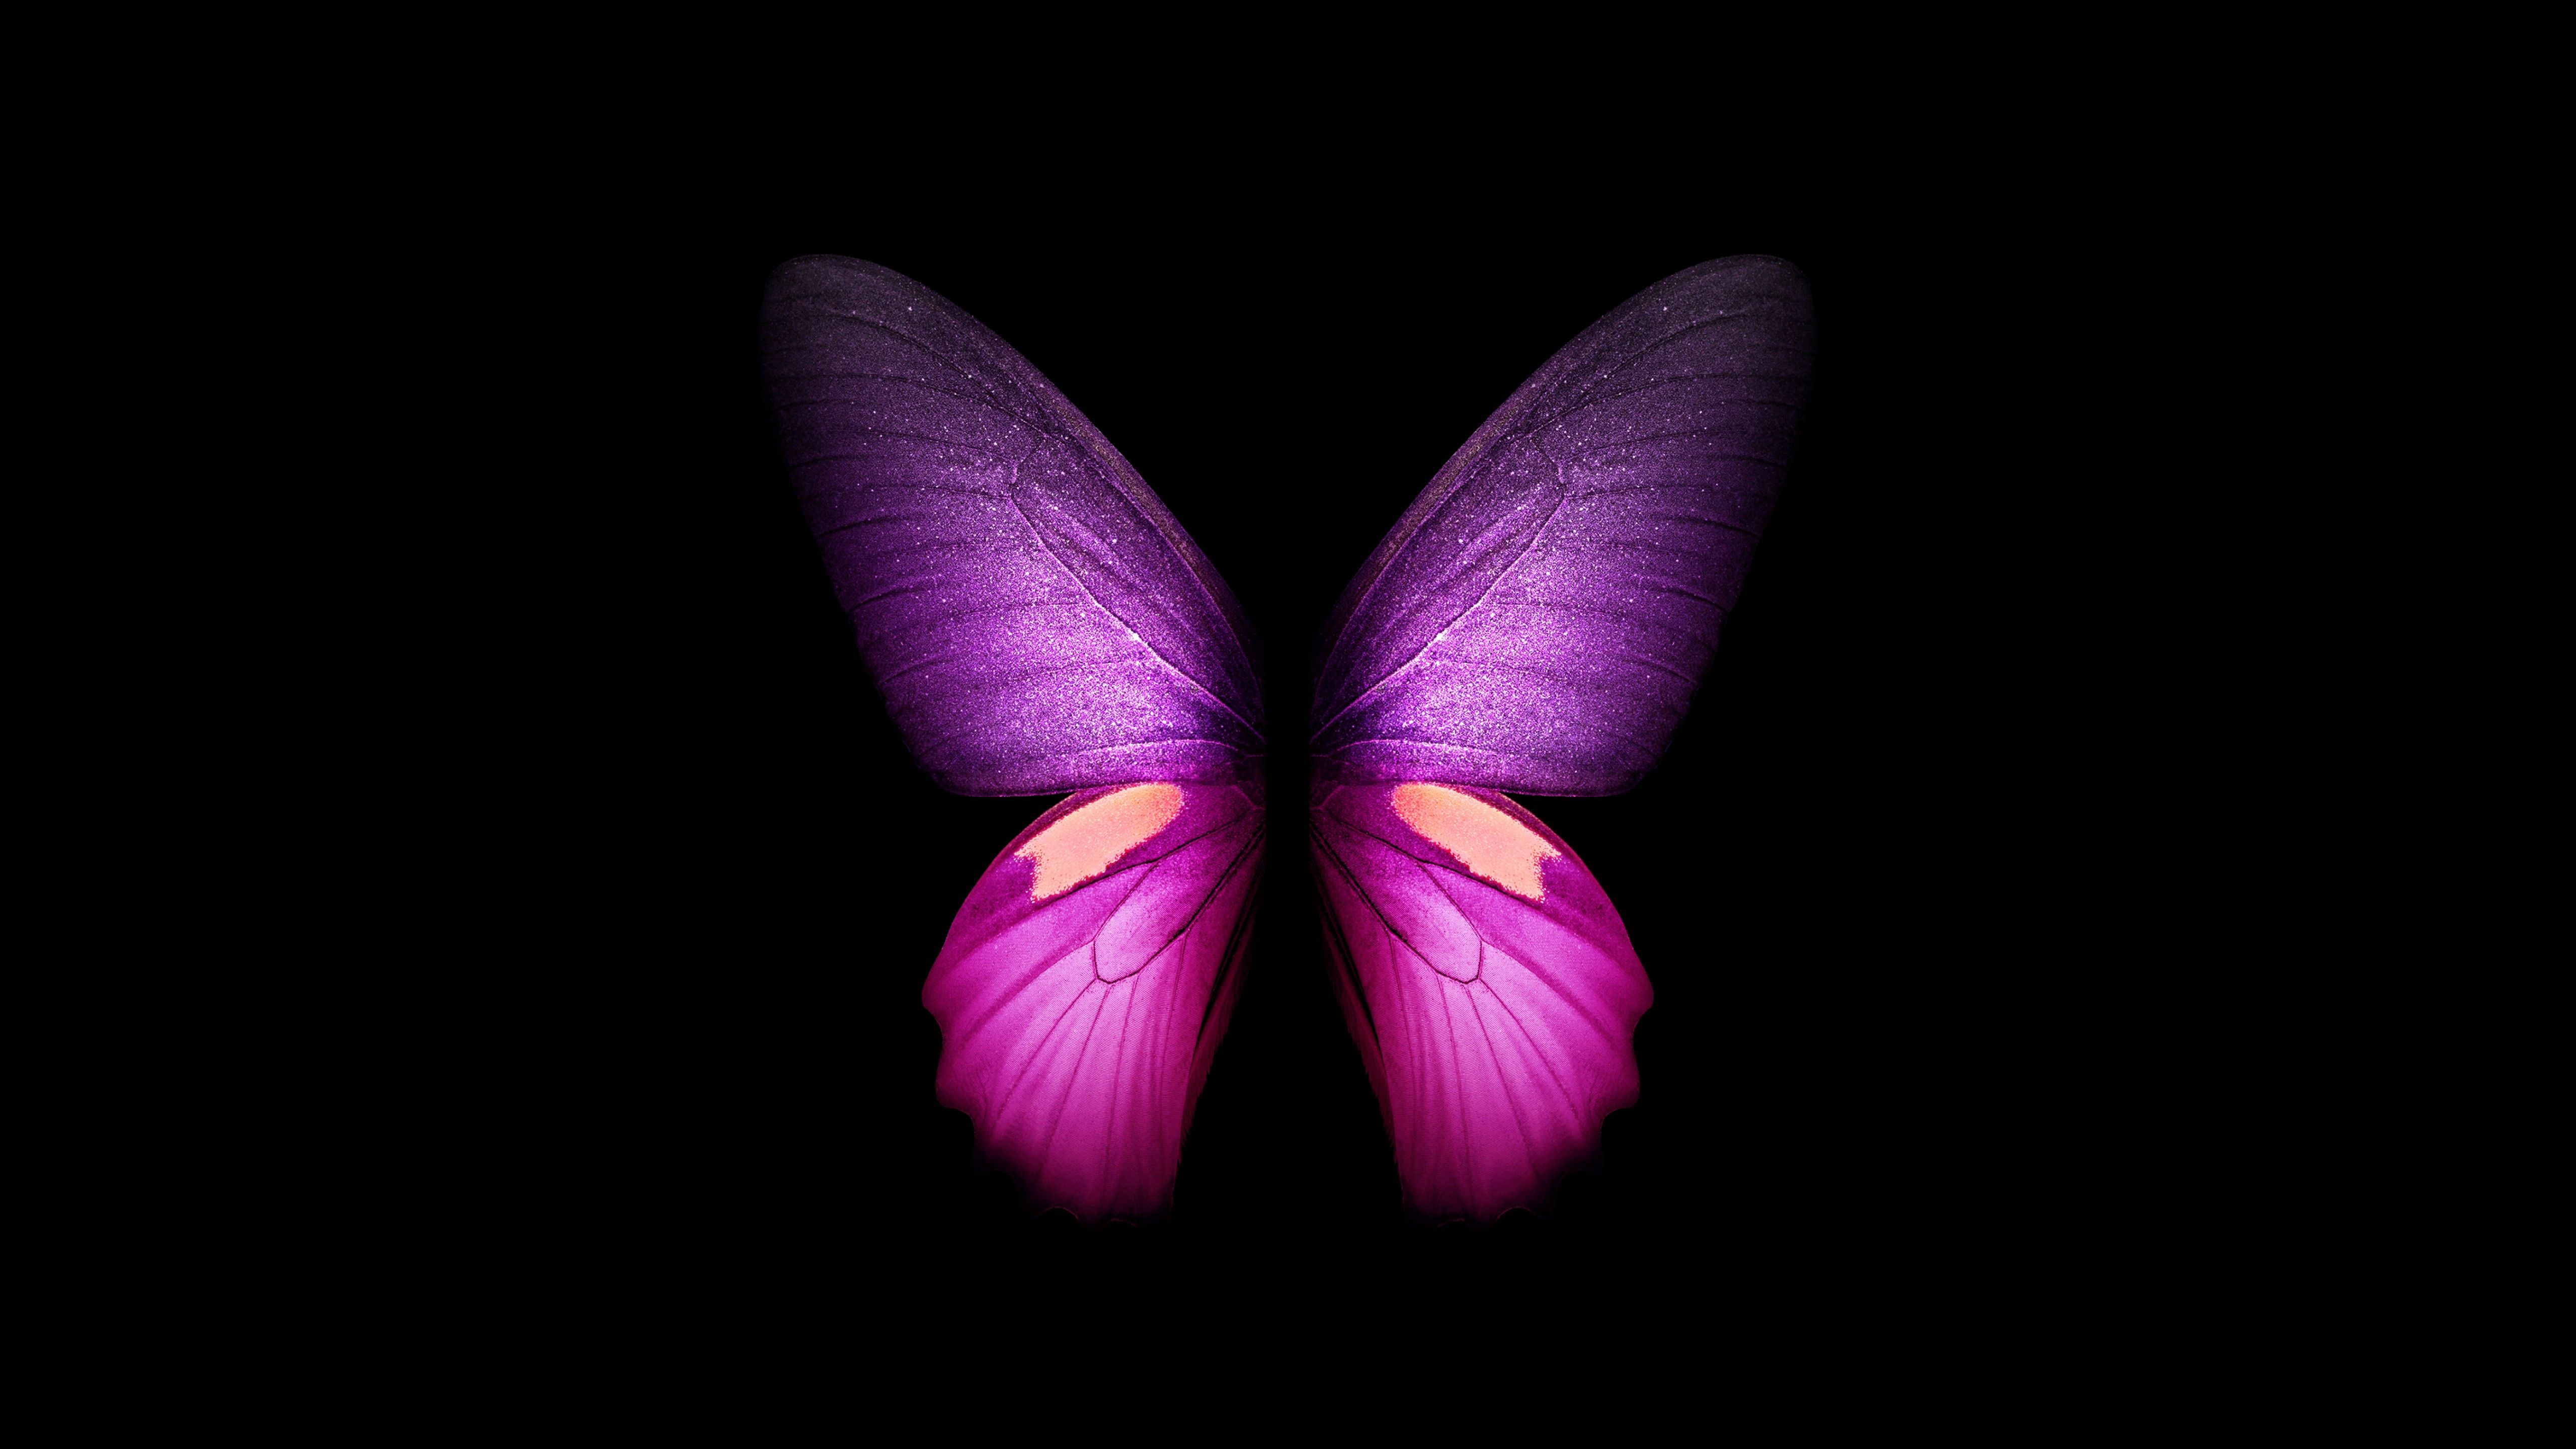 Purple Butterfly 4K Wallpaper, Wings, Black background, Samsung Galaxy Fold, AMOLED, CGI, Girly, Stock, Graphics CGI